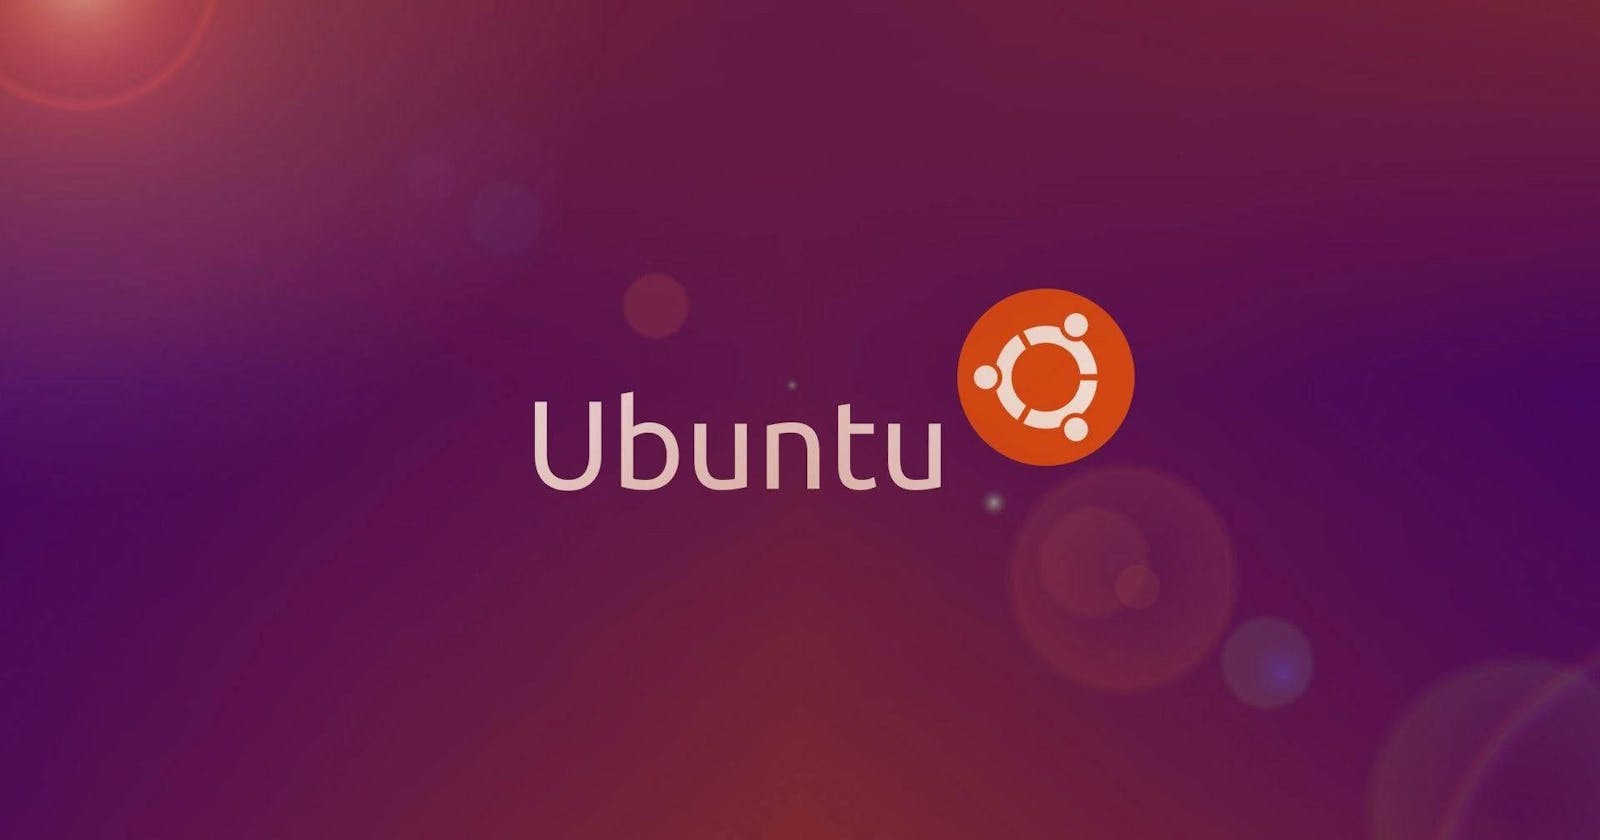 Ubuntu: A Guide to Open-Source Freedom